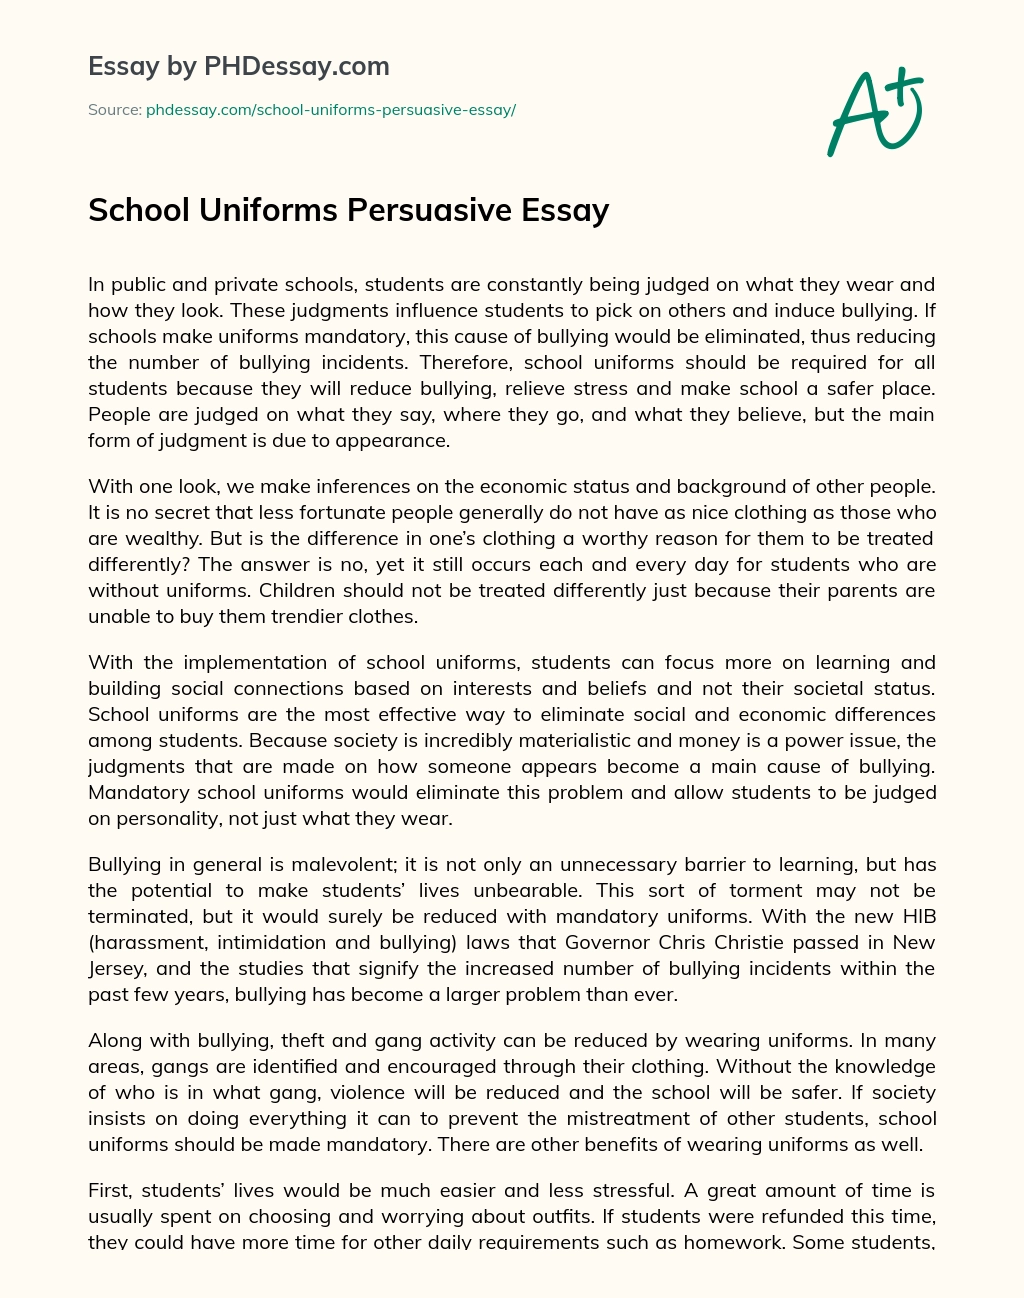 School Uniforms Persuasive Essay